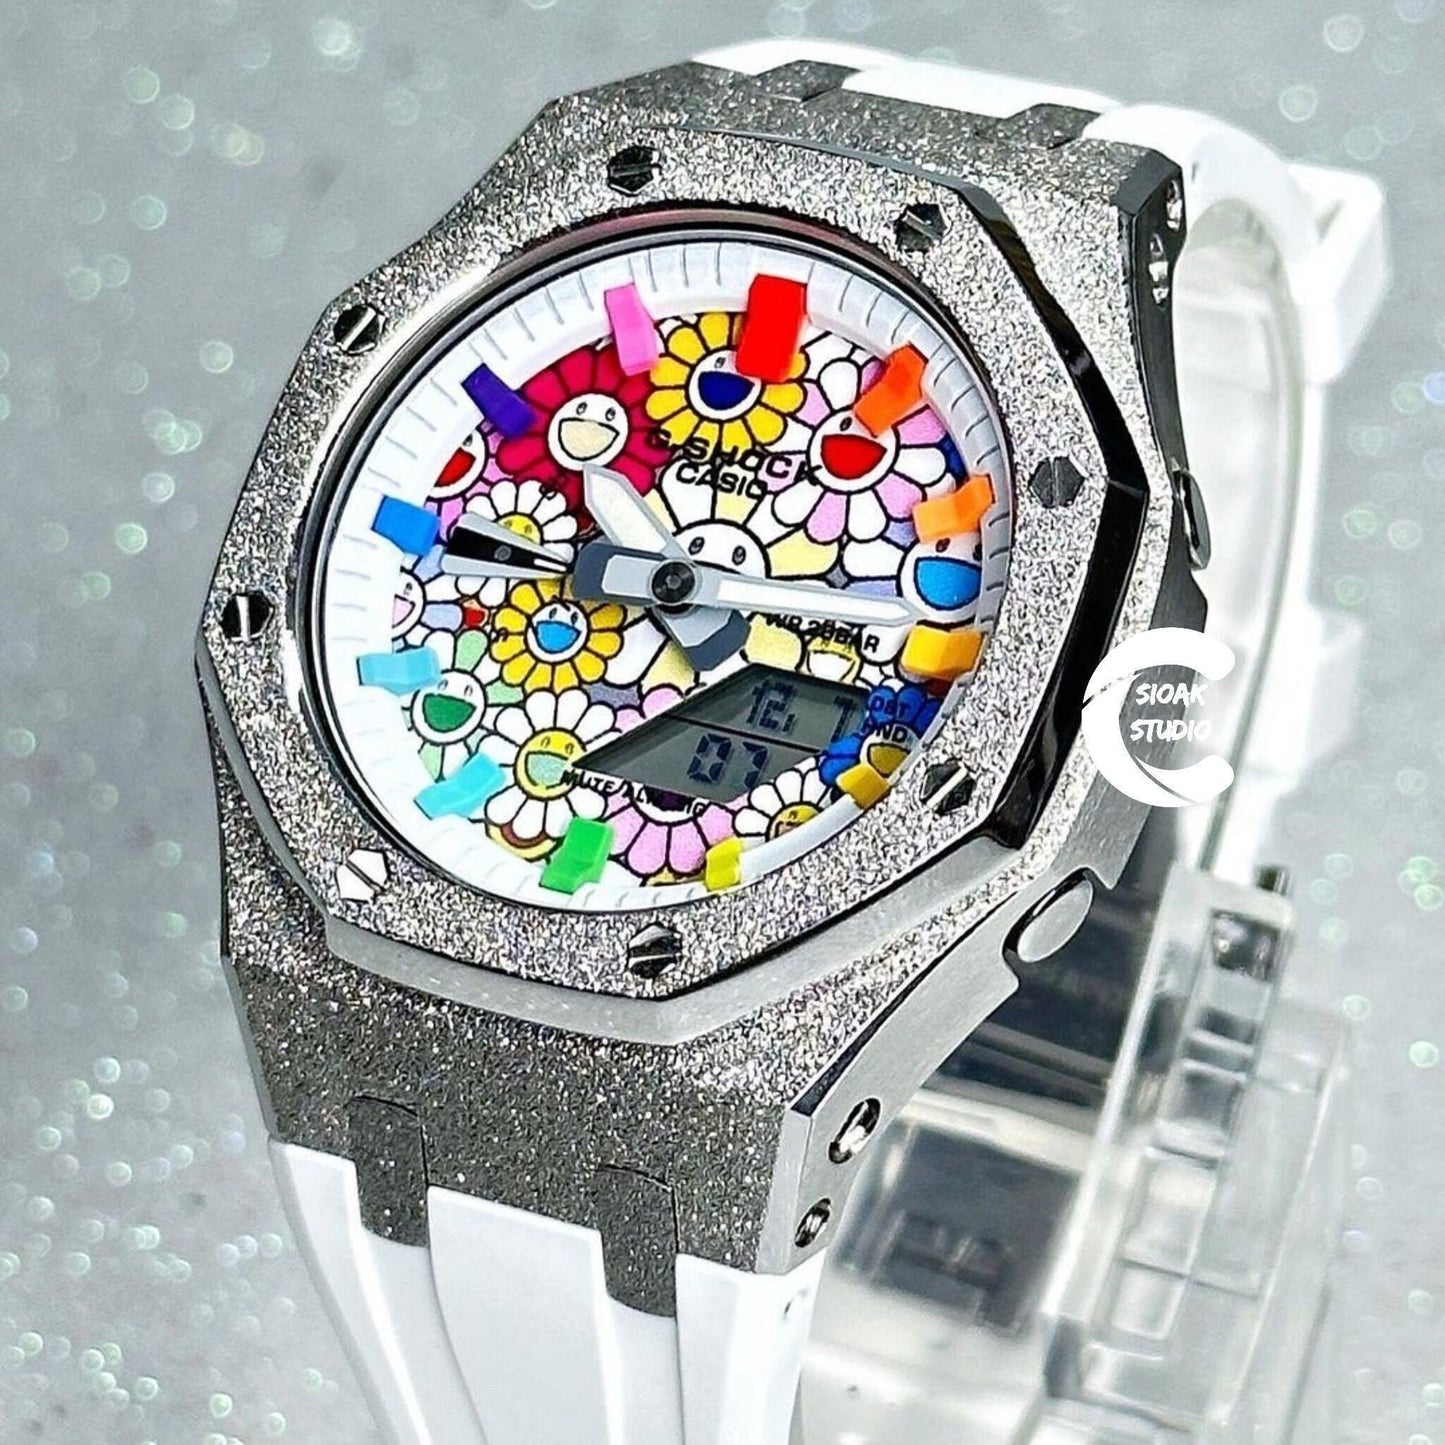 Casioak Mod Watch Frosted Silver Case White Strap Rainbow Time Mark Takashi Murakami Dial 44mm - Casioak Studio